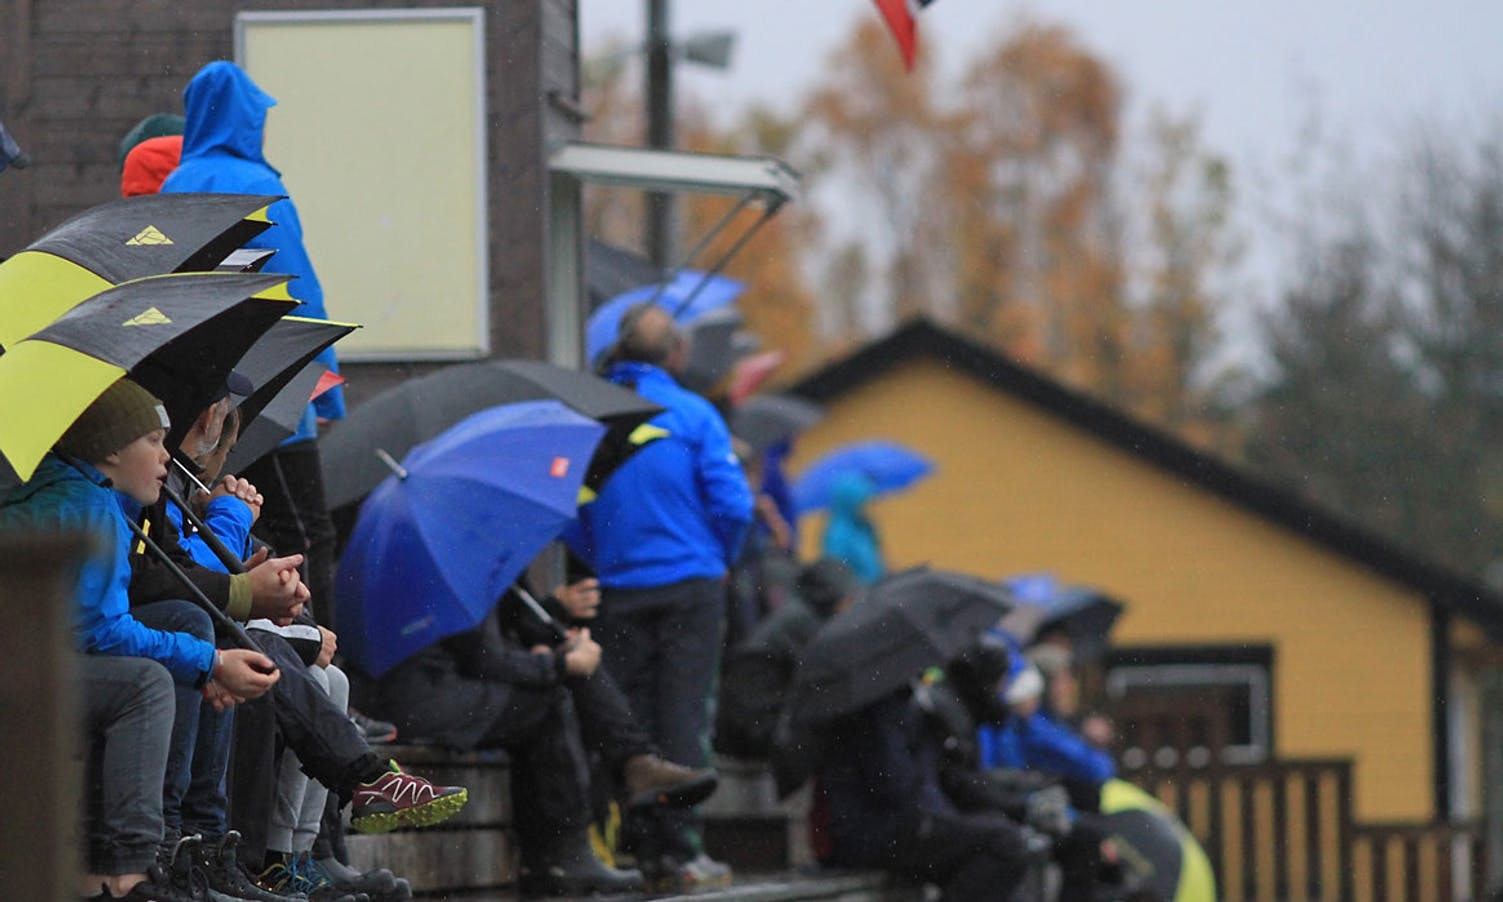 Tungt med nedbør, men Os-fansen har paraply. (Foto: KOG)